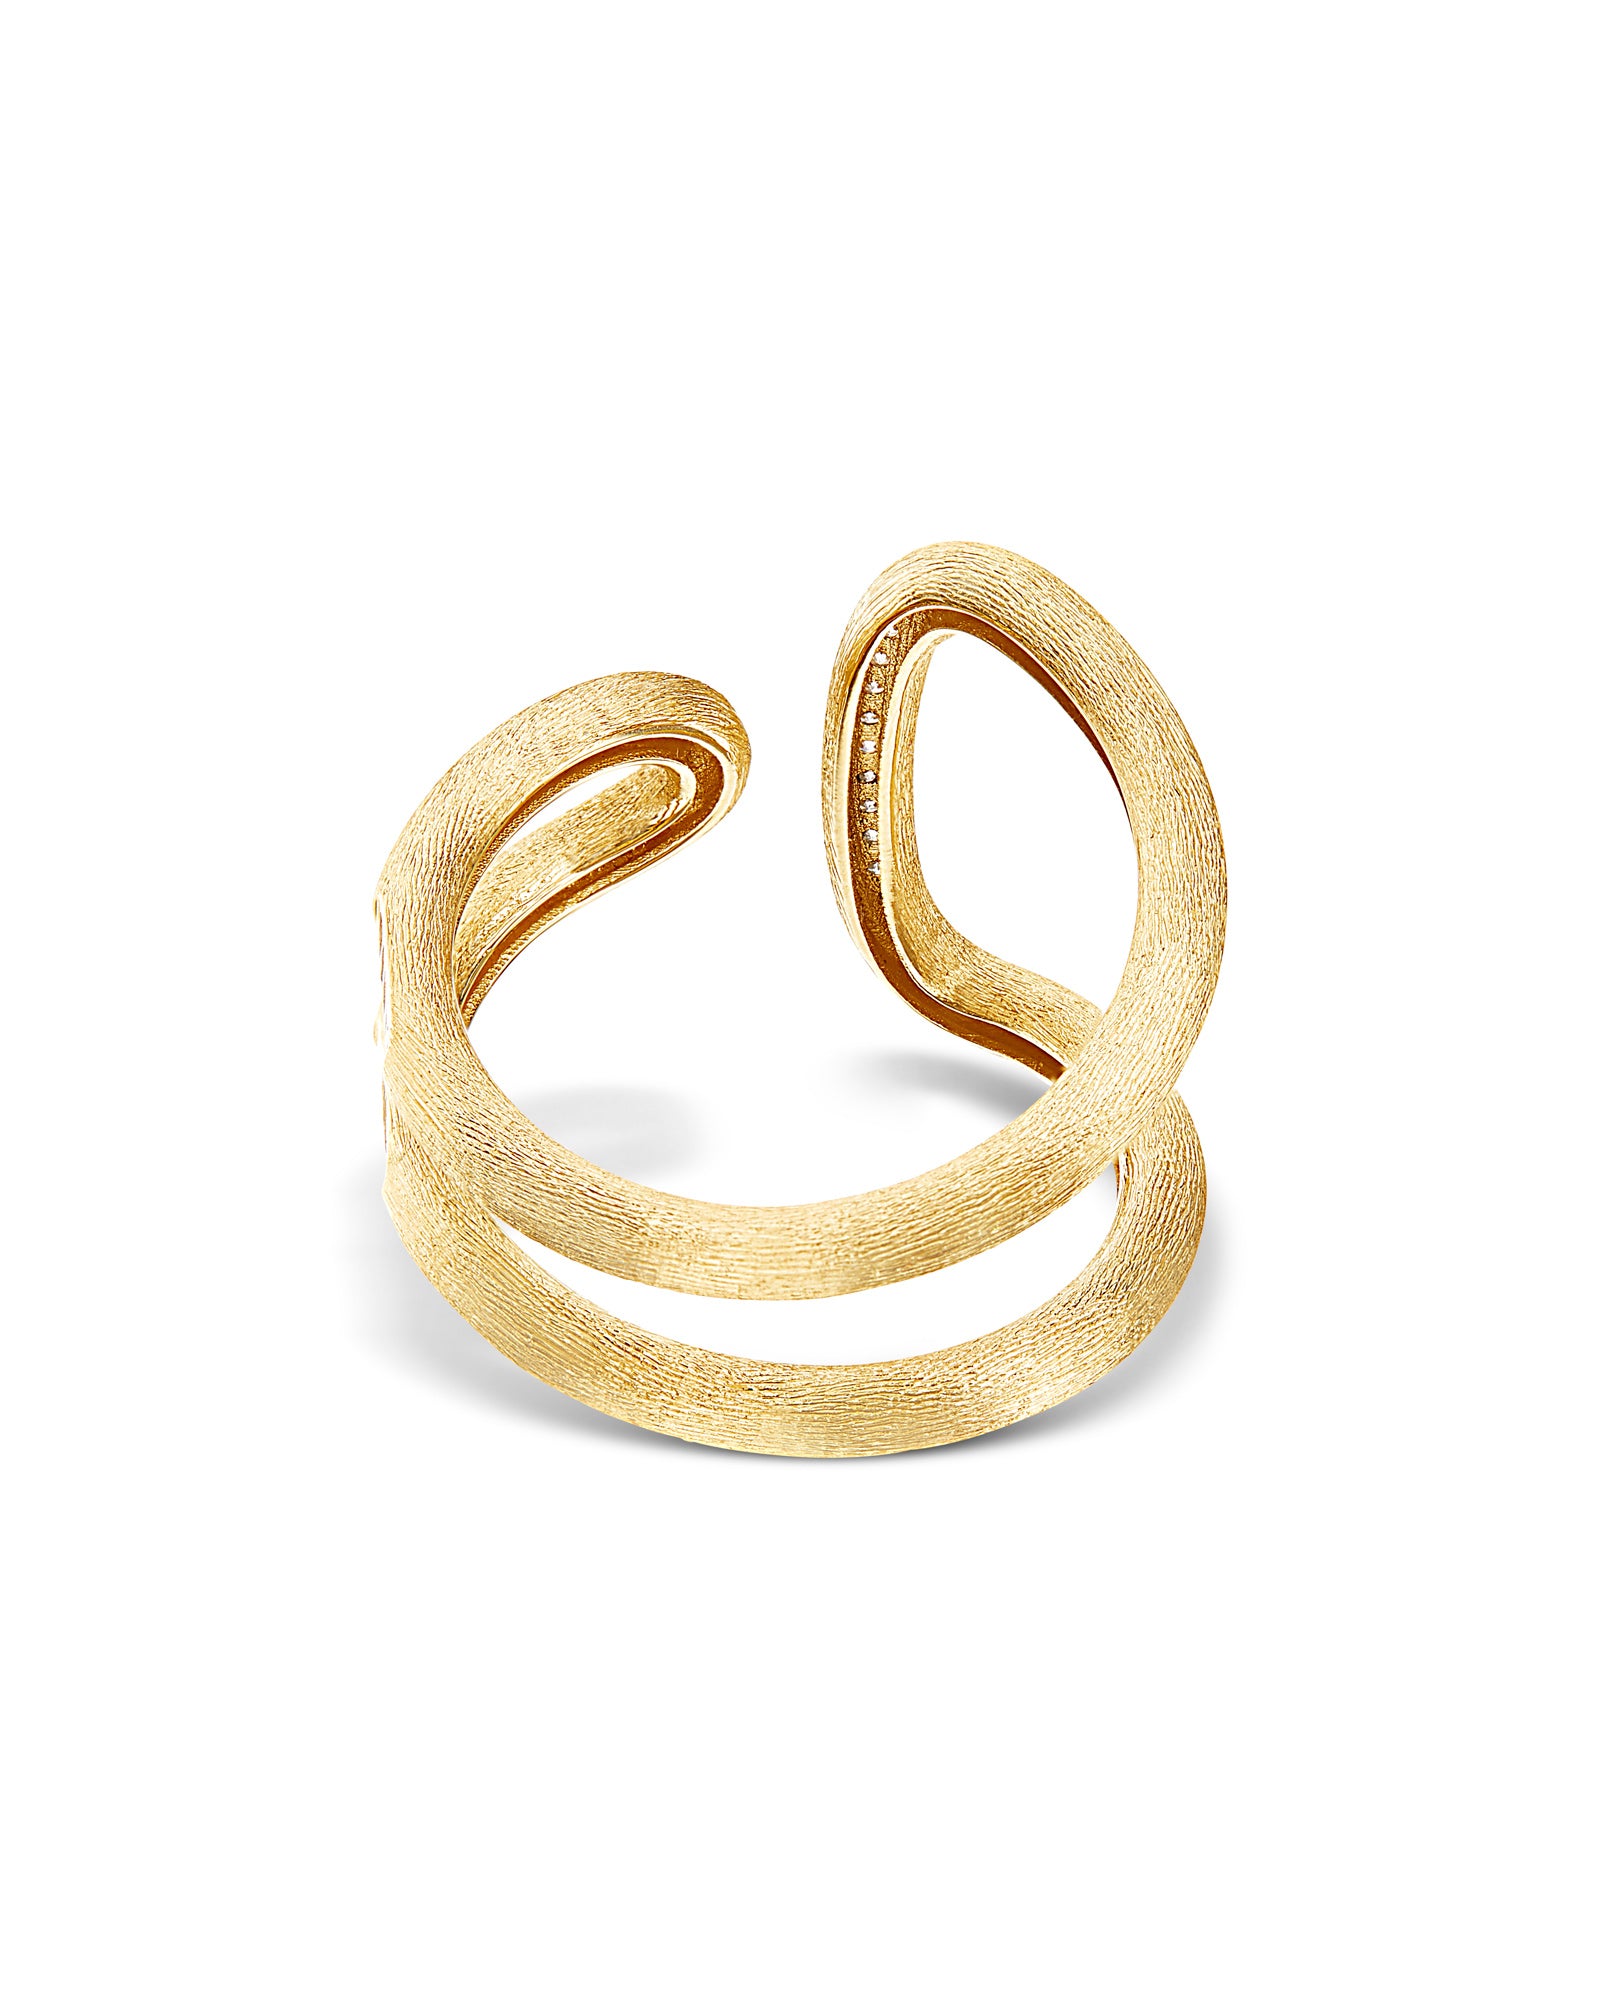 "Libera" Gold and diamonds contemporary design ring